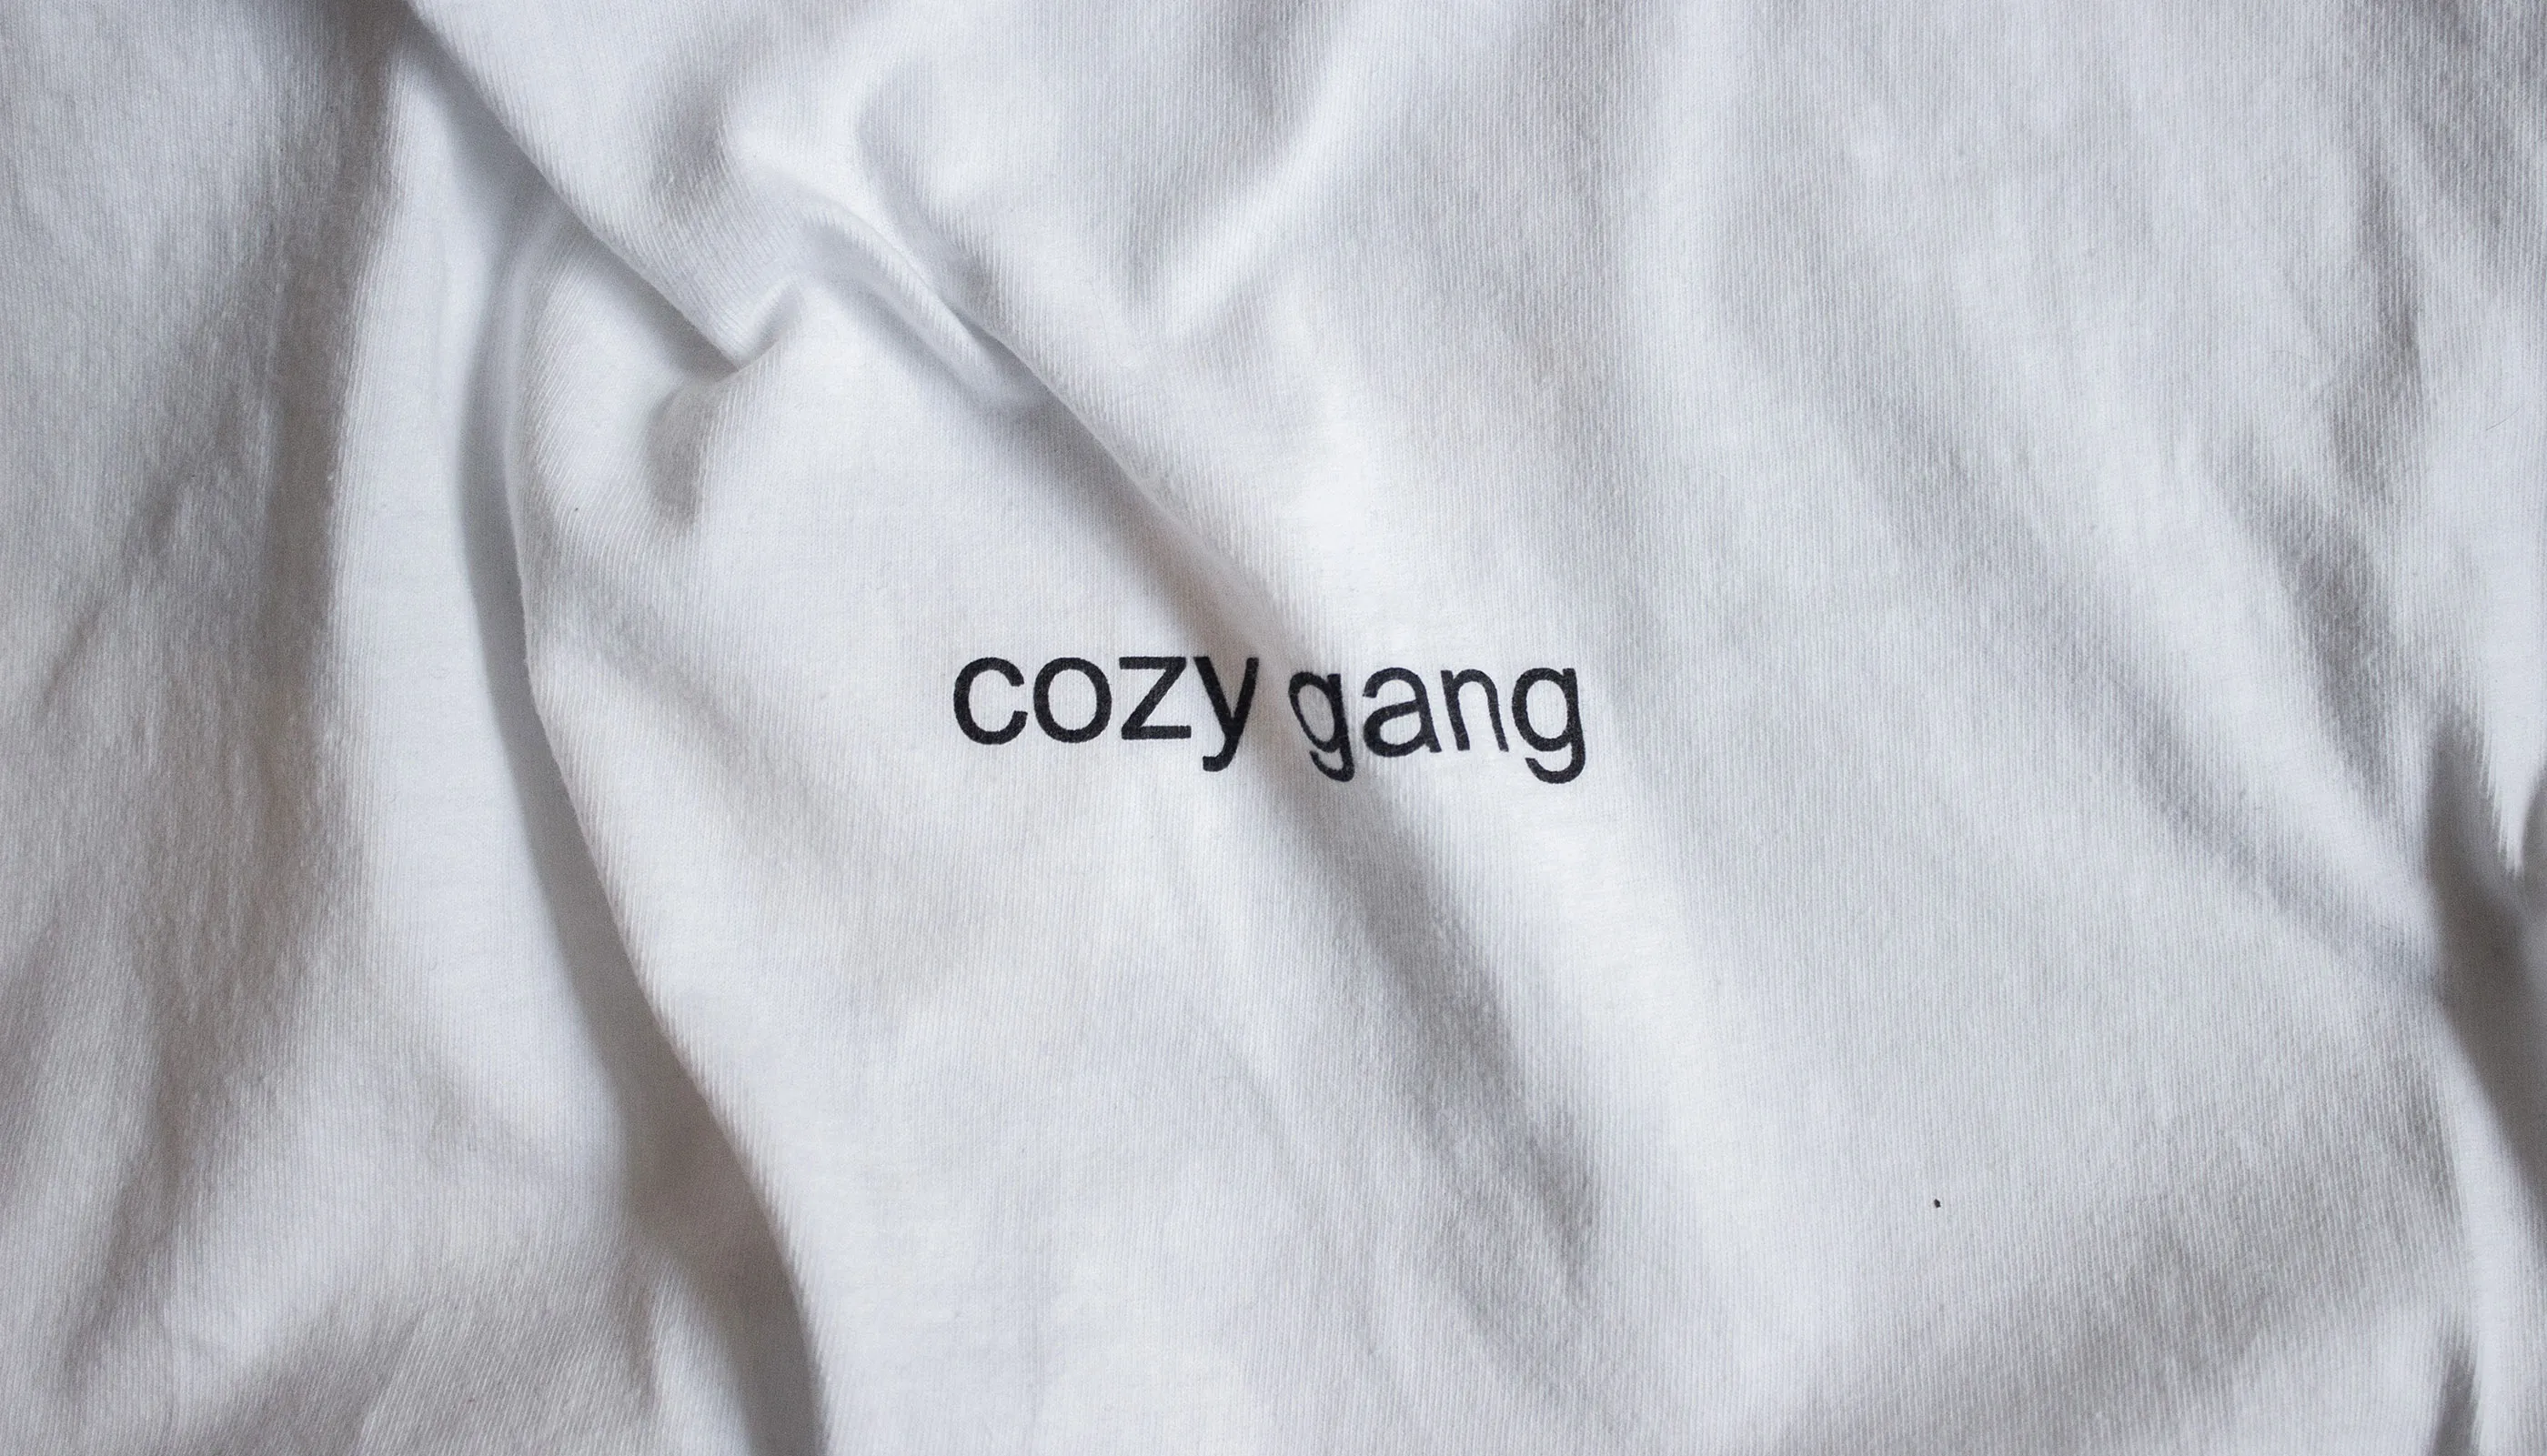 Cozy Gang, Shirt design, screen printing on textile, Merchandise